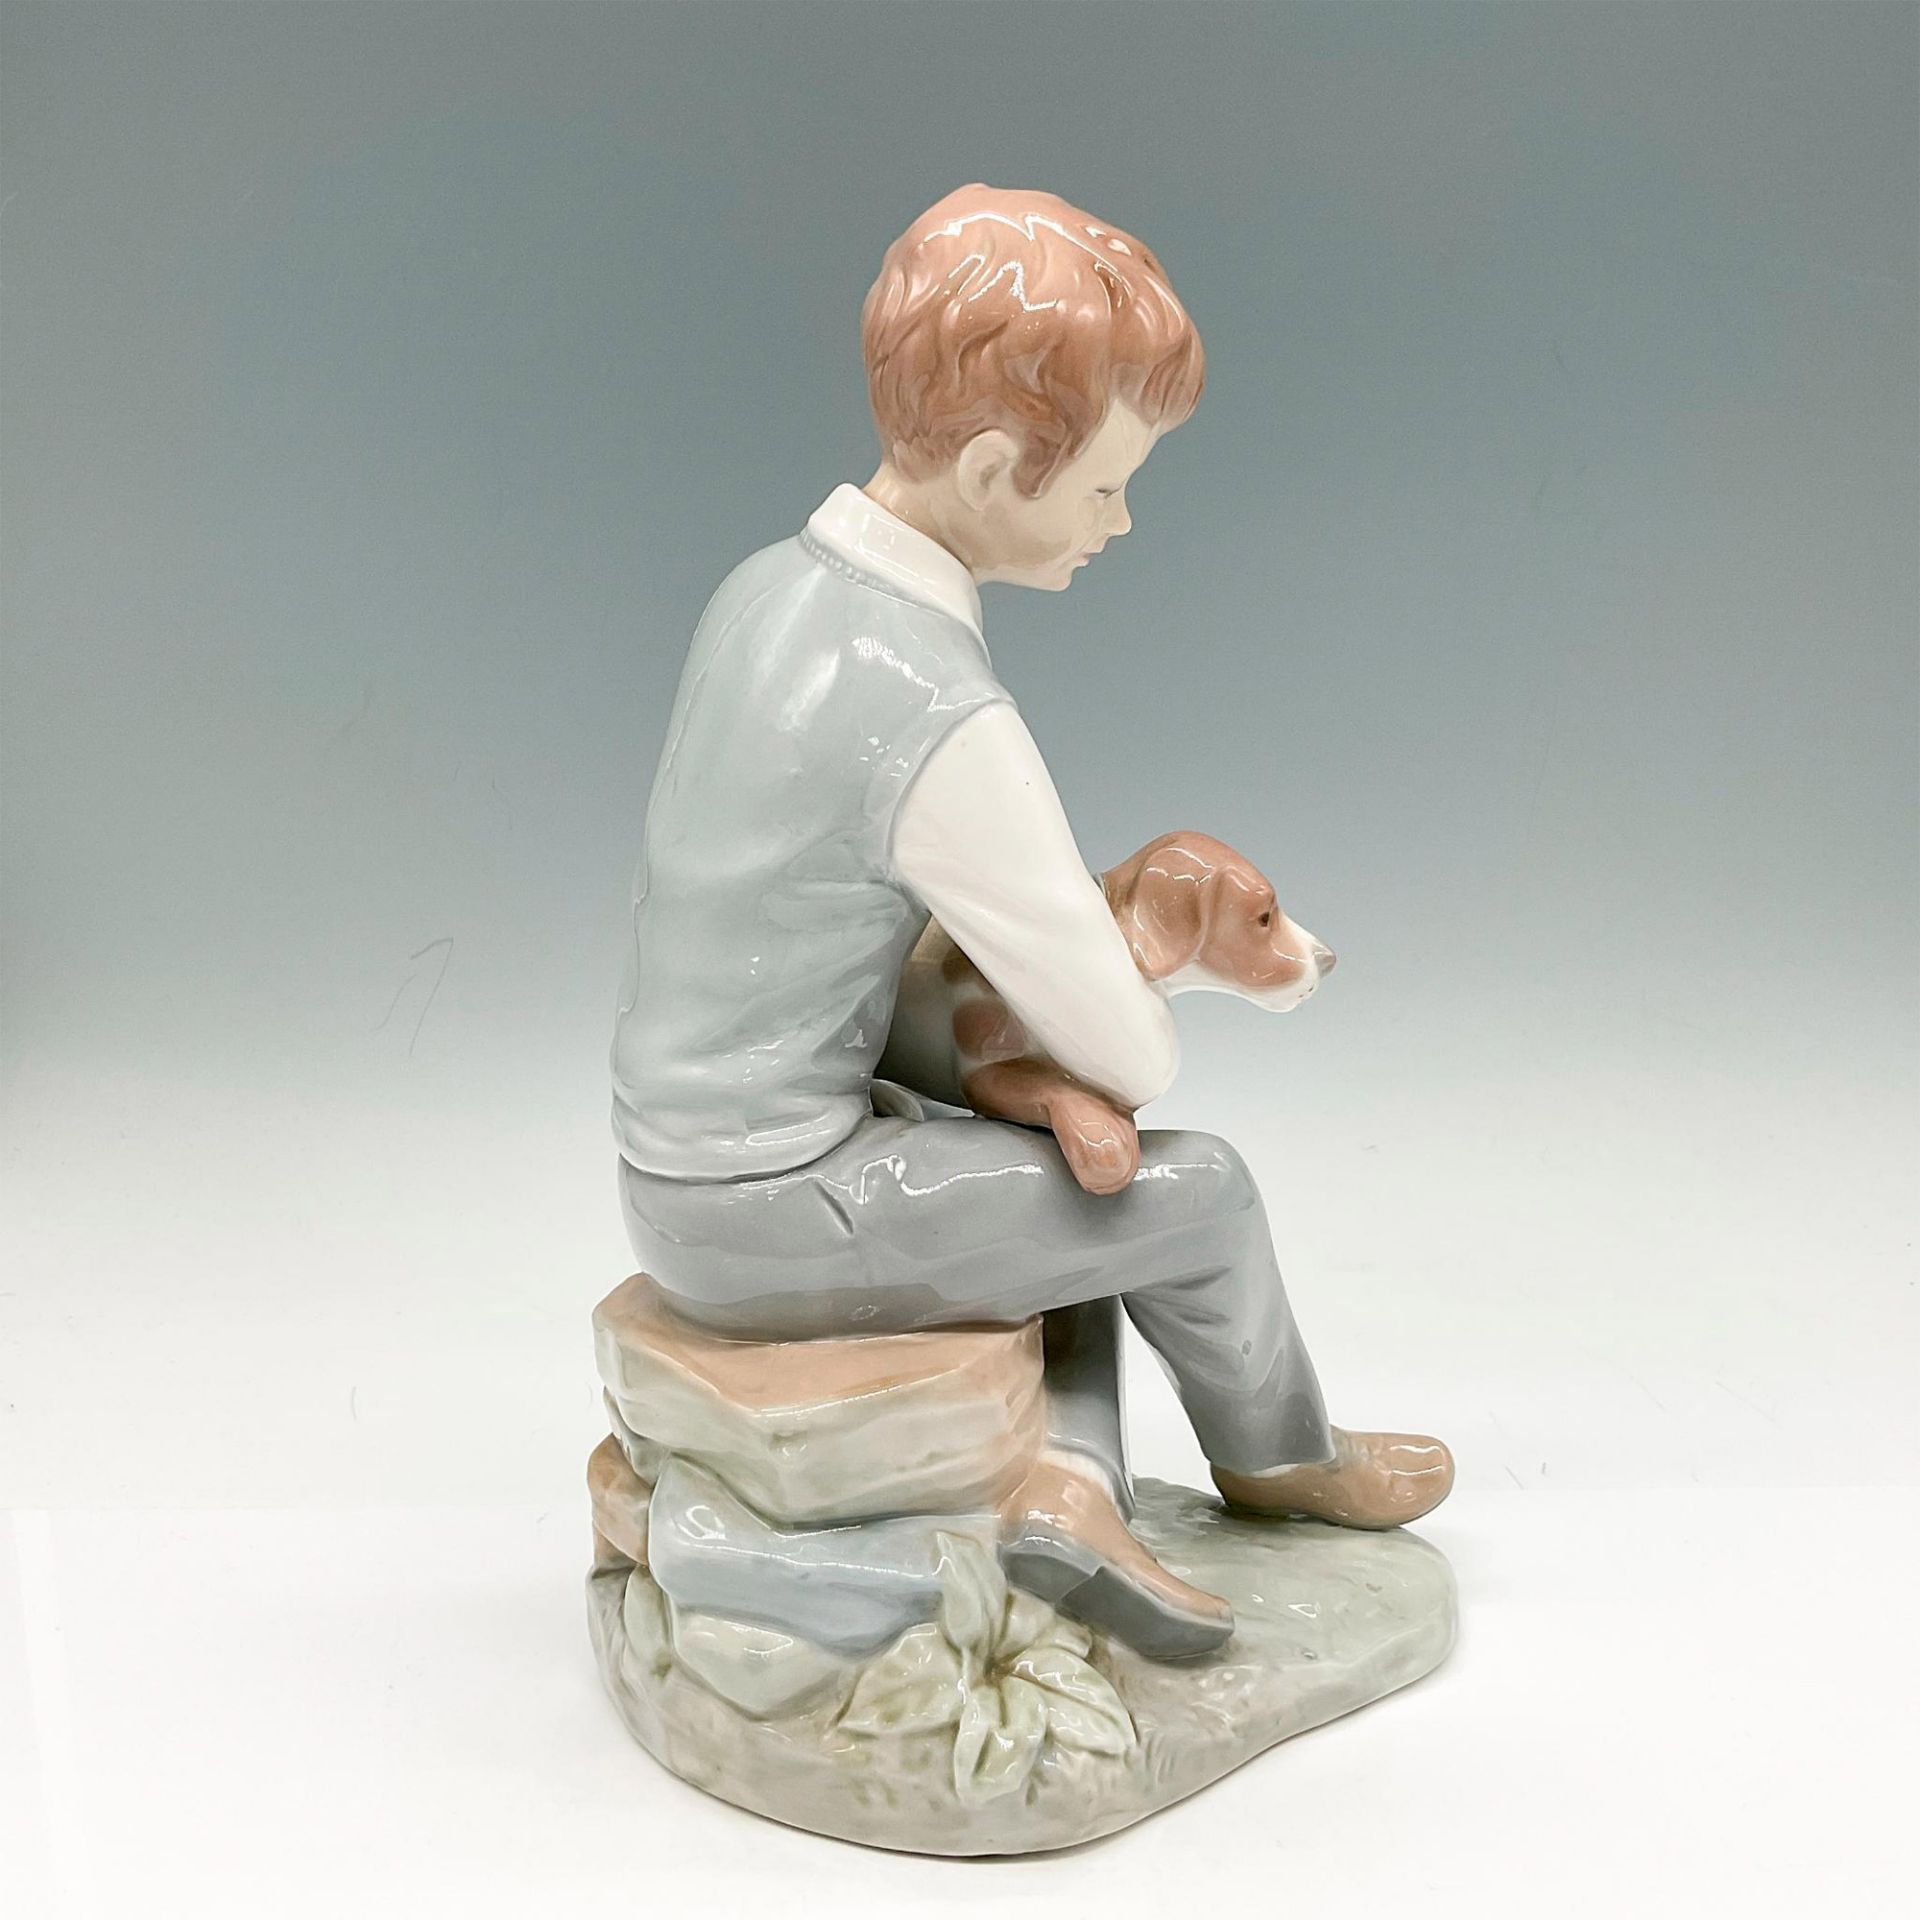 Zaphir Porcelain Figurine, Boy with Dog - Image 3 of 4